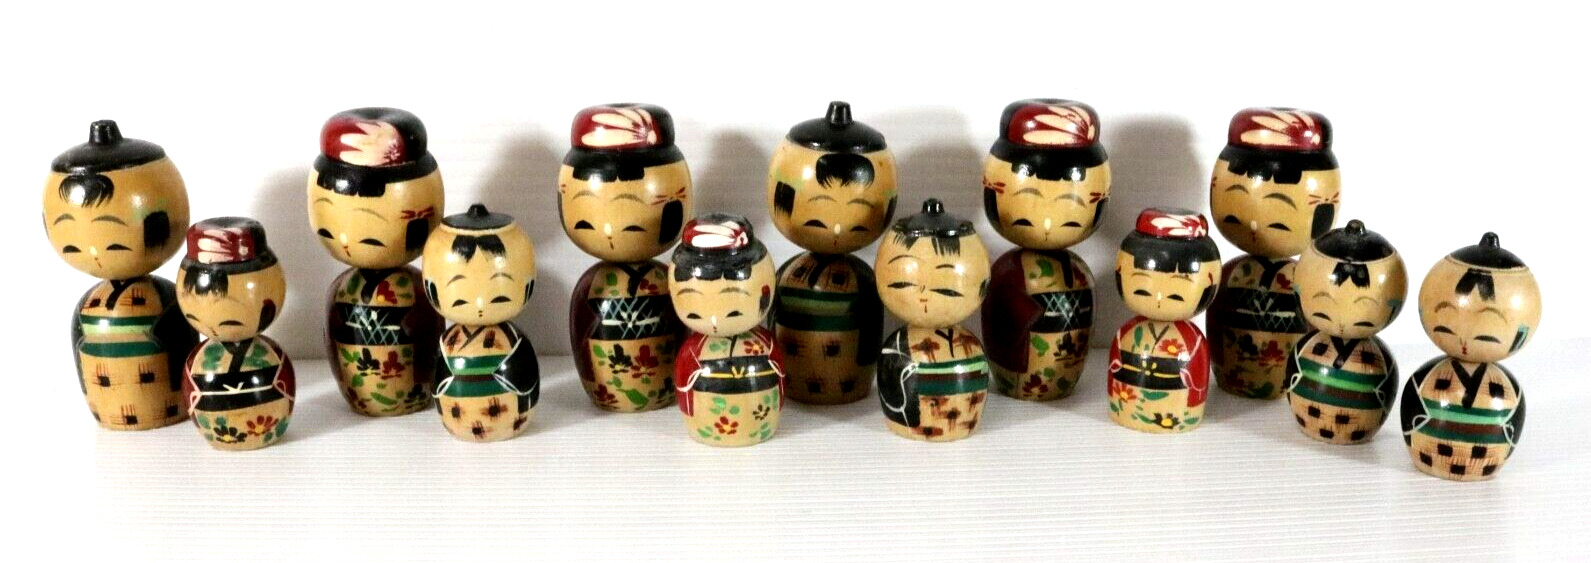 Lot of 13 Vintage Kokeshi Mini Wooden Japanese Dolls Family Made in Japan